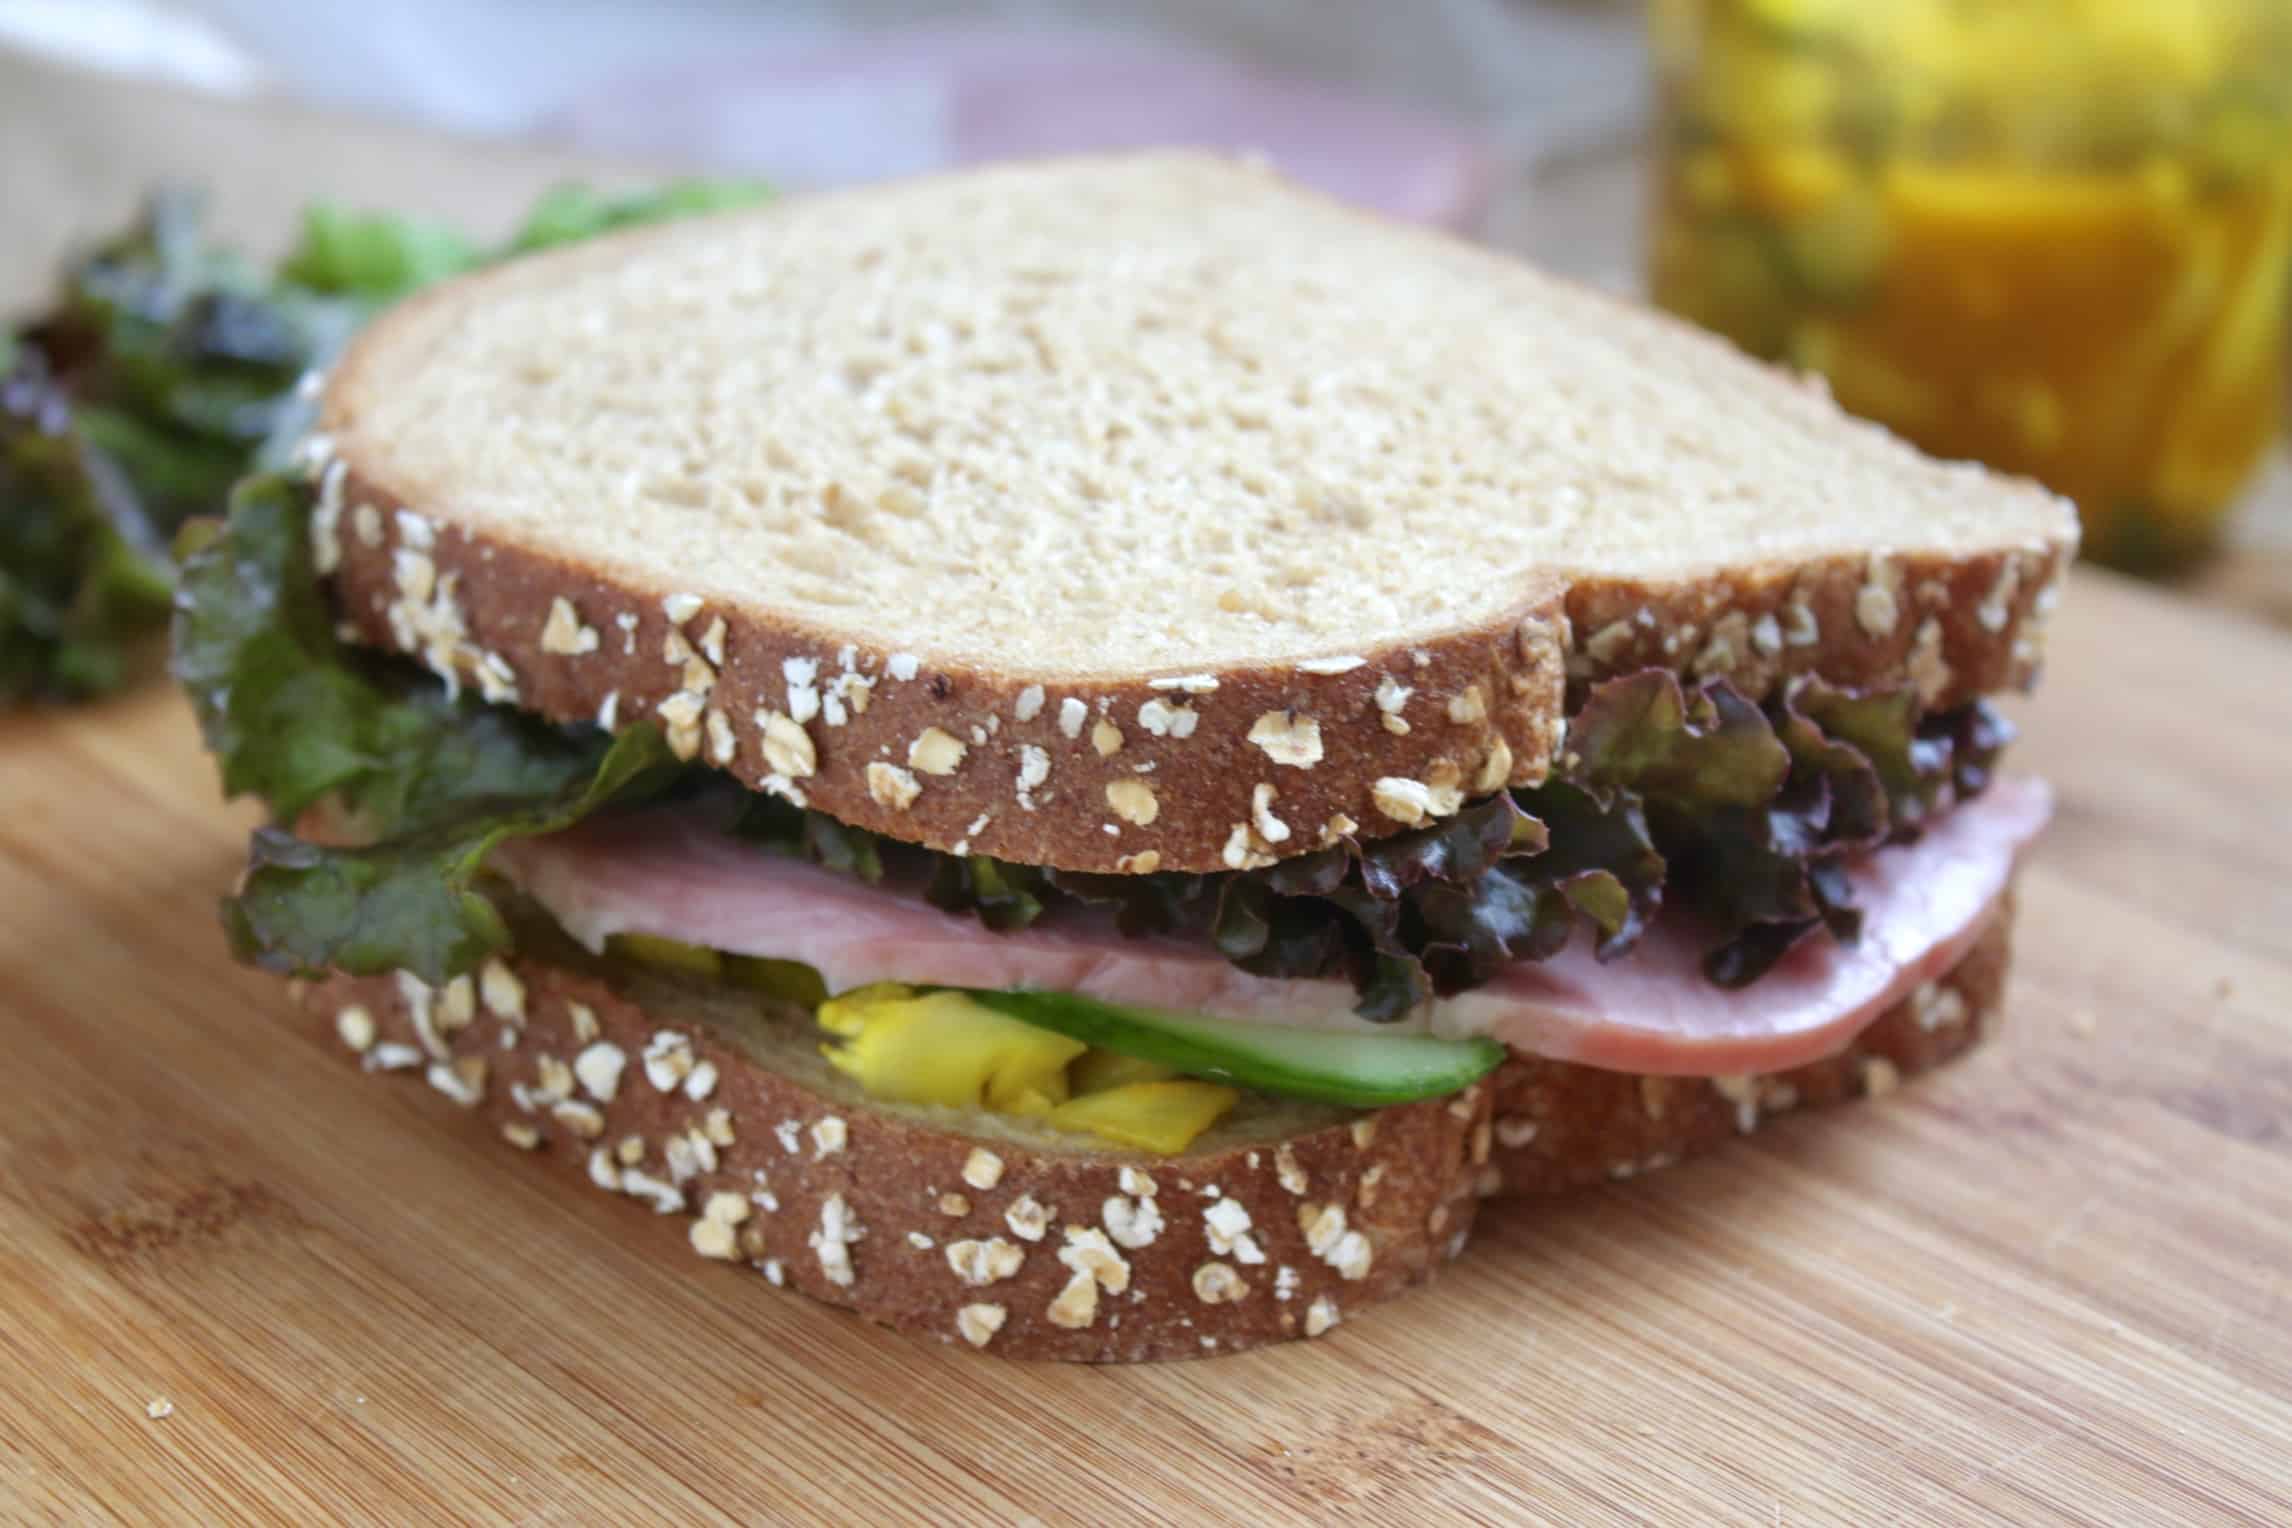 Ham cucumber lunch sandwich on wheat bread.